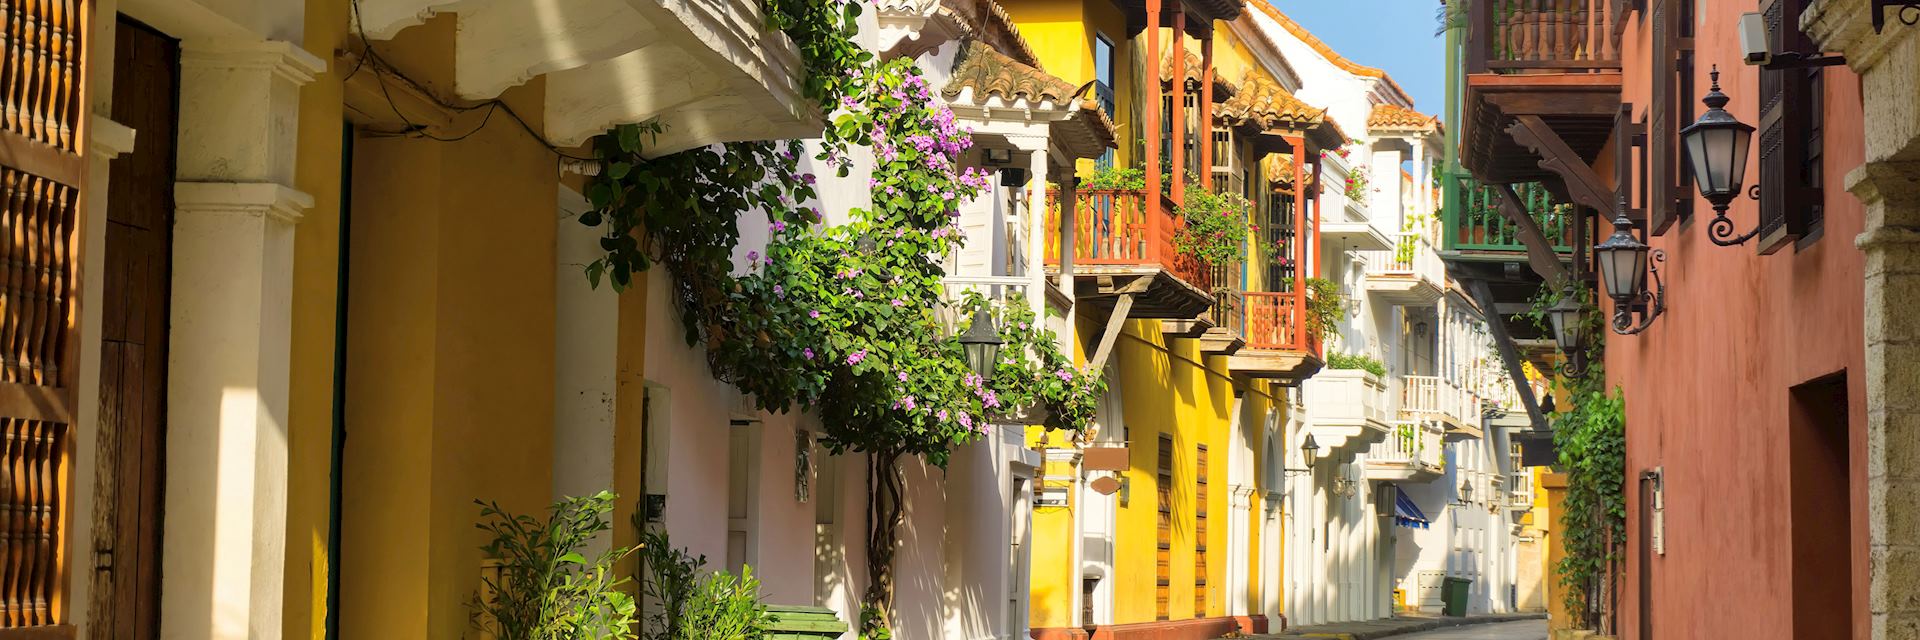 Colonial street in Cartagena